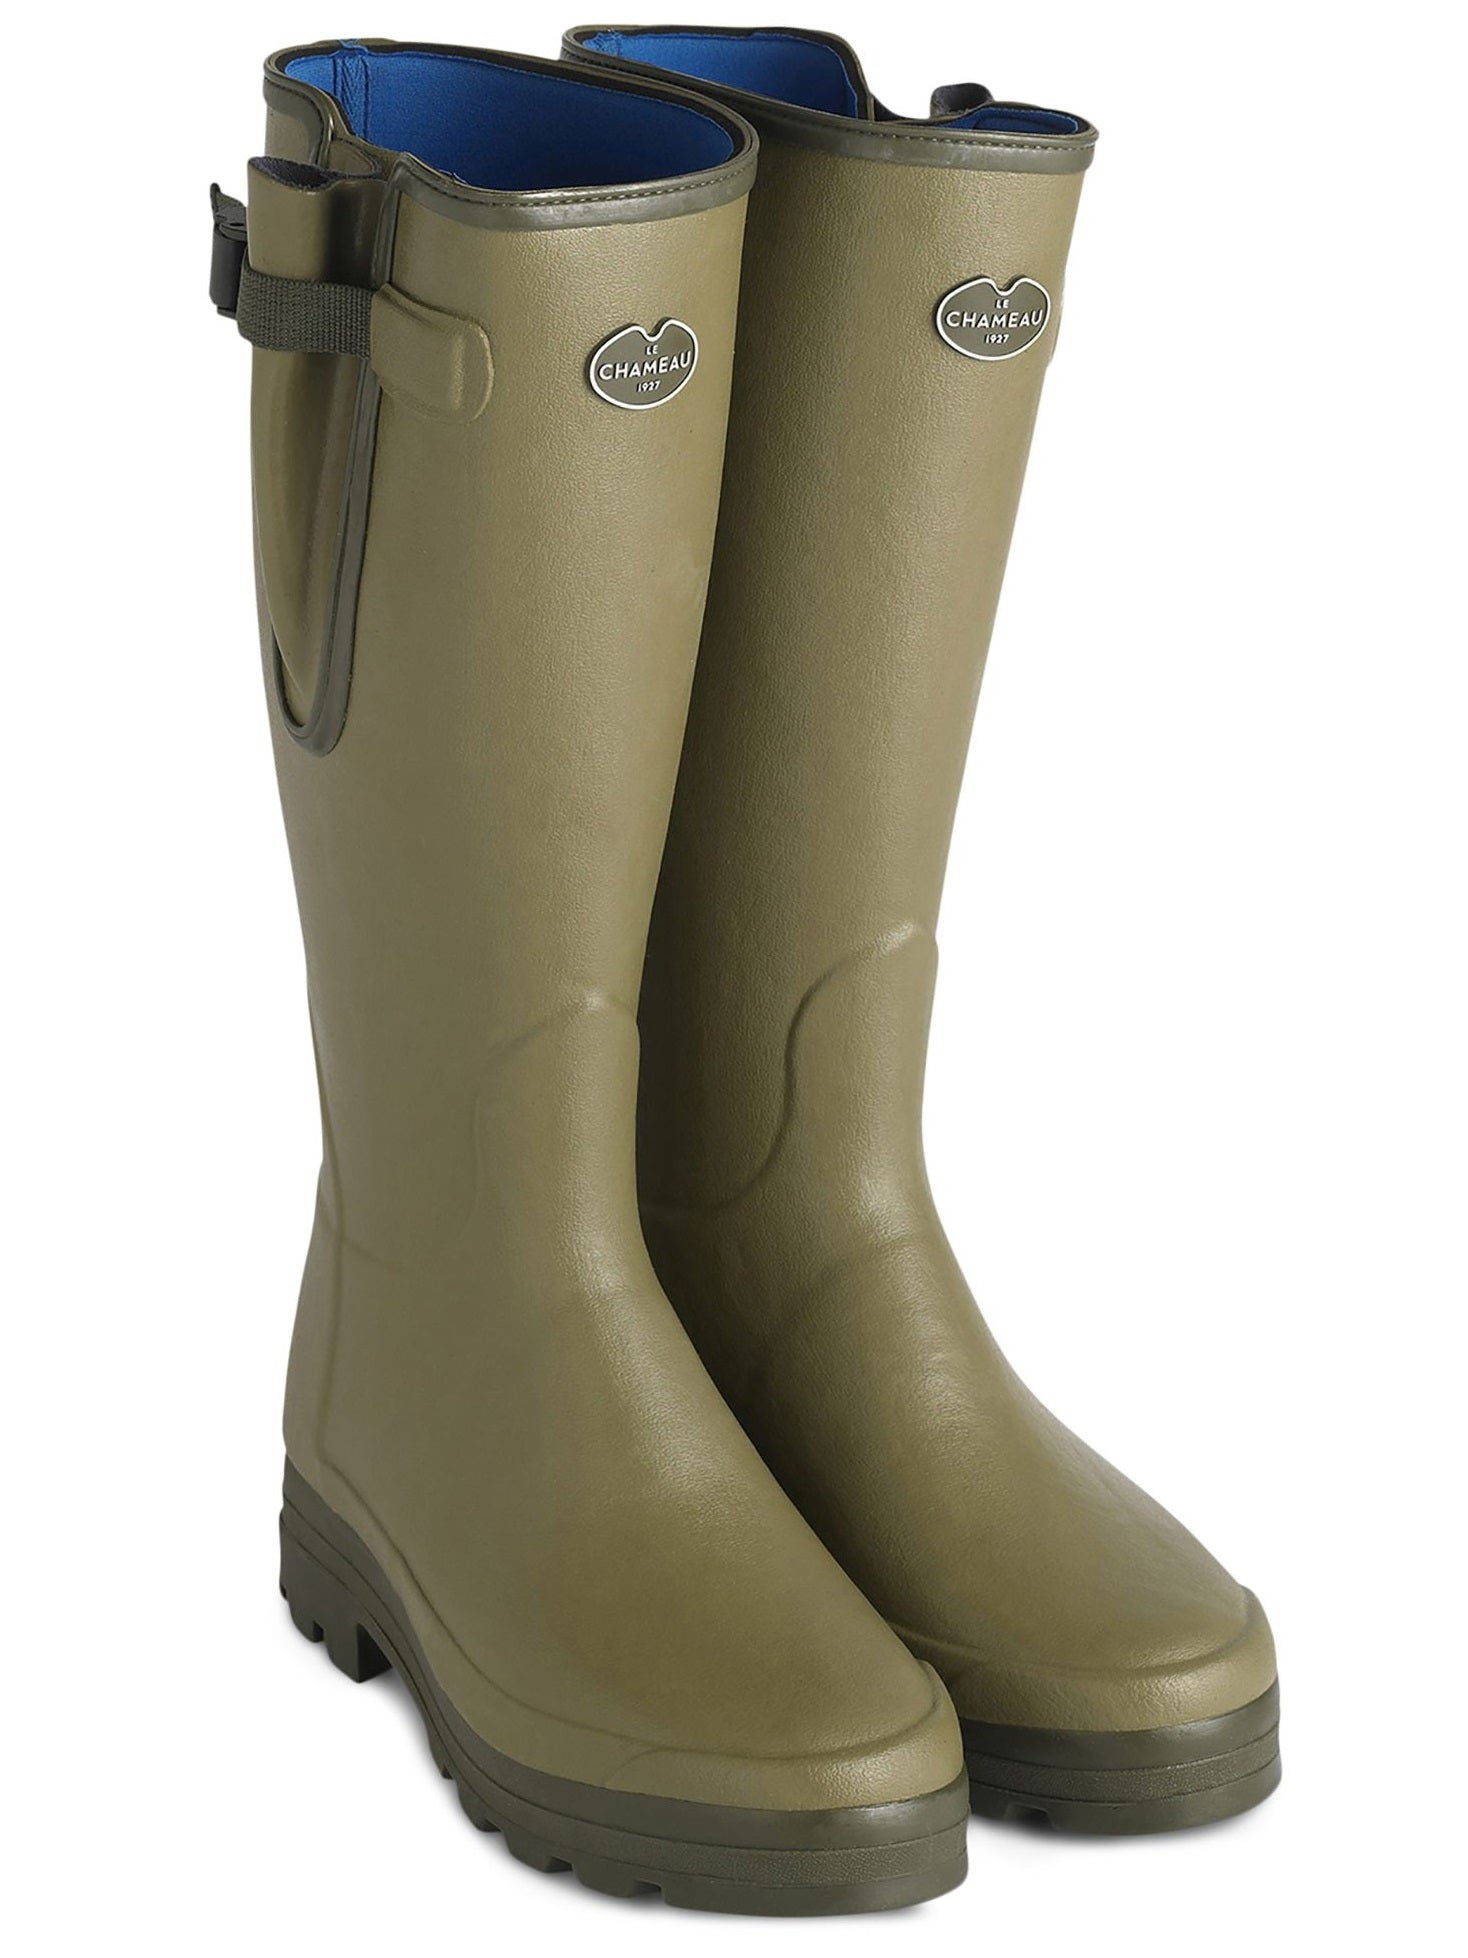 LE CHAMEAU Vierzonord XL Wide Calf Boots - Mens Neoprene Lined - Vert Vierzon